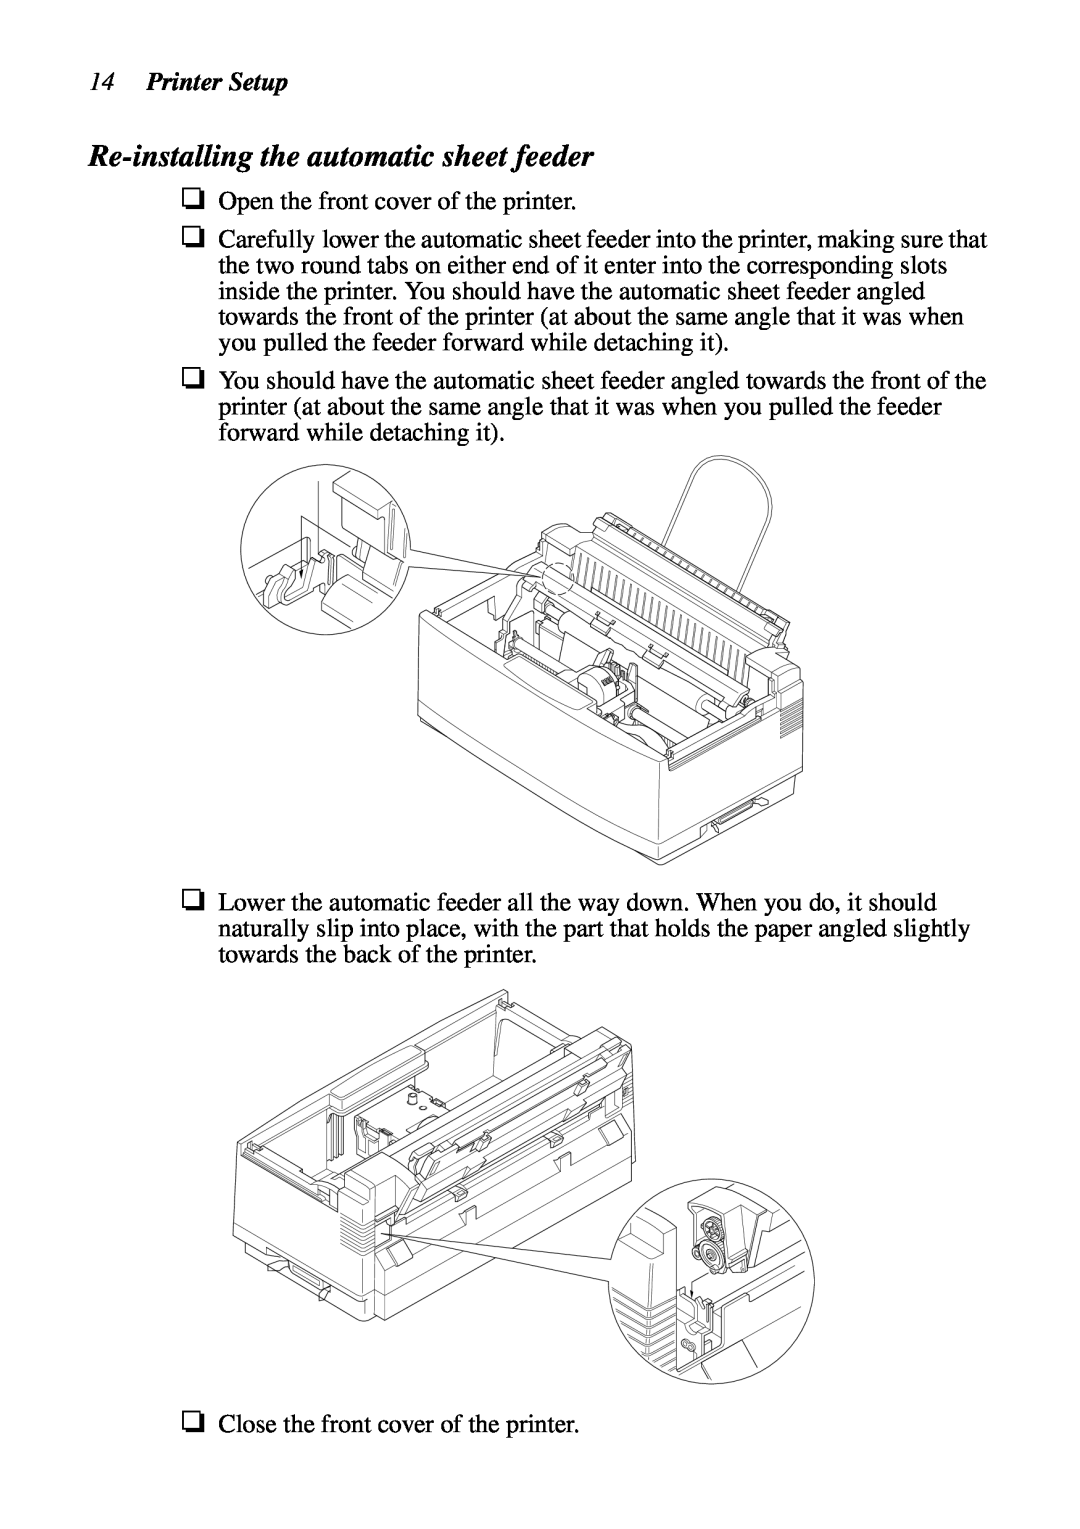 Star Micronics LC-90 NX-1010 user manual Re-installing the automatic sheet feeder, Printer Setup 